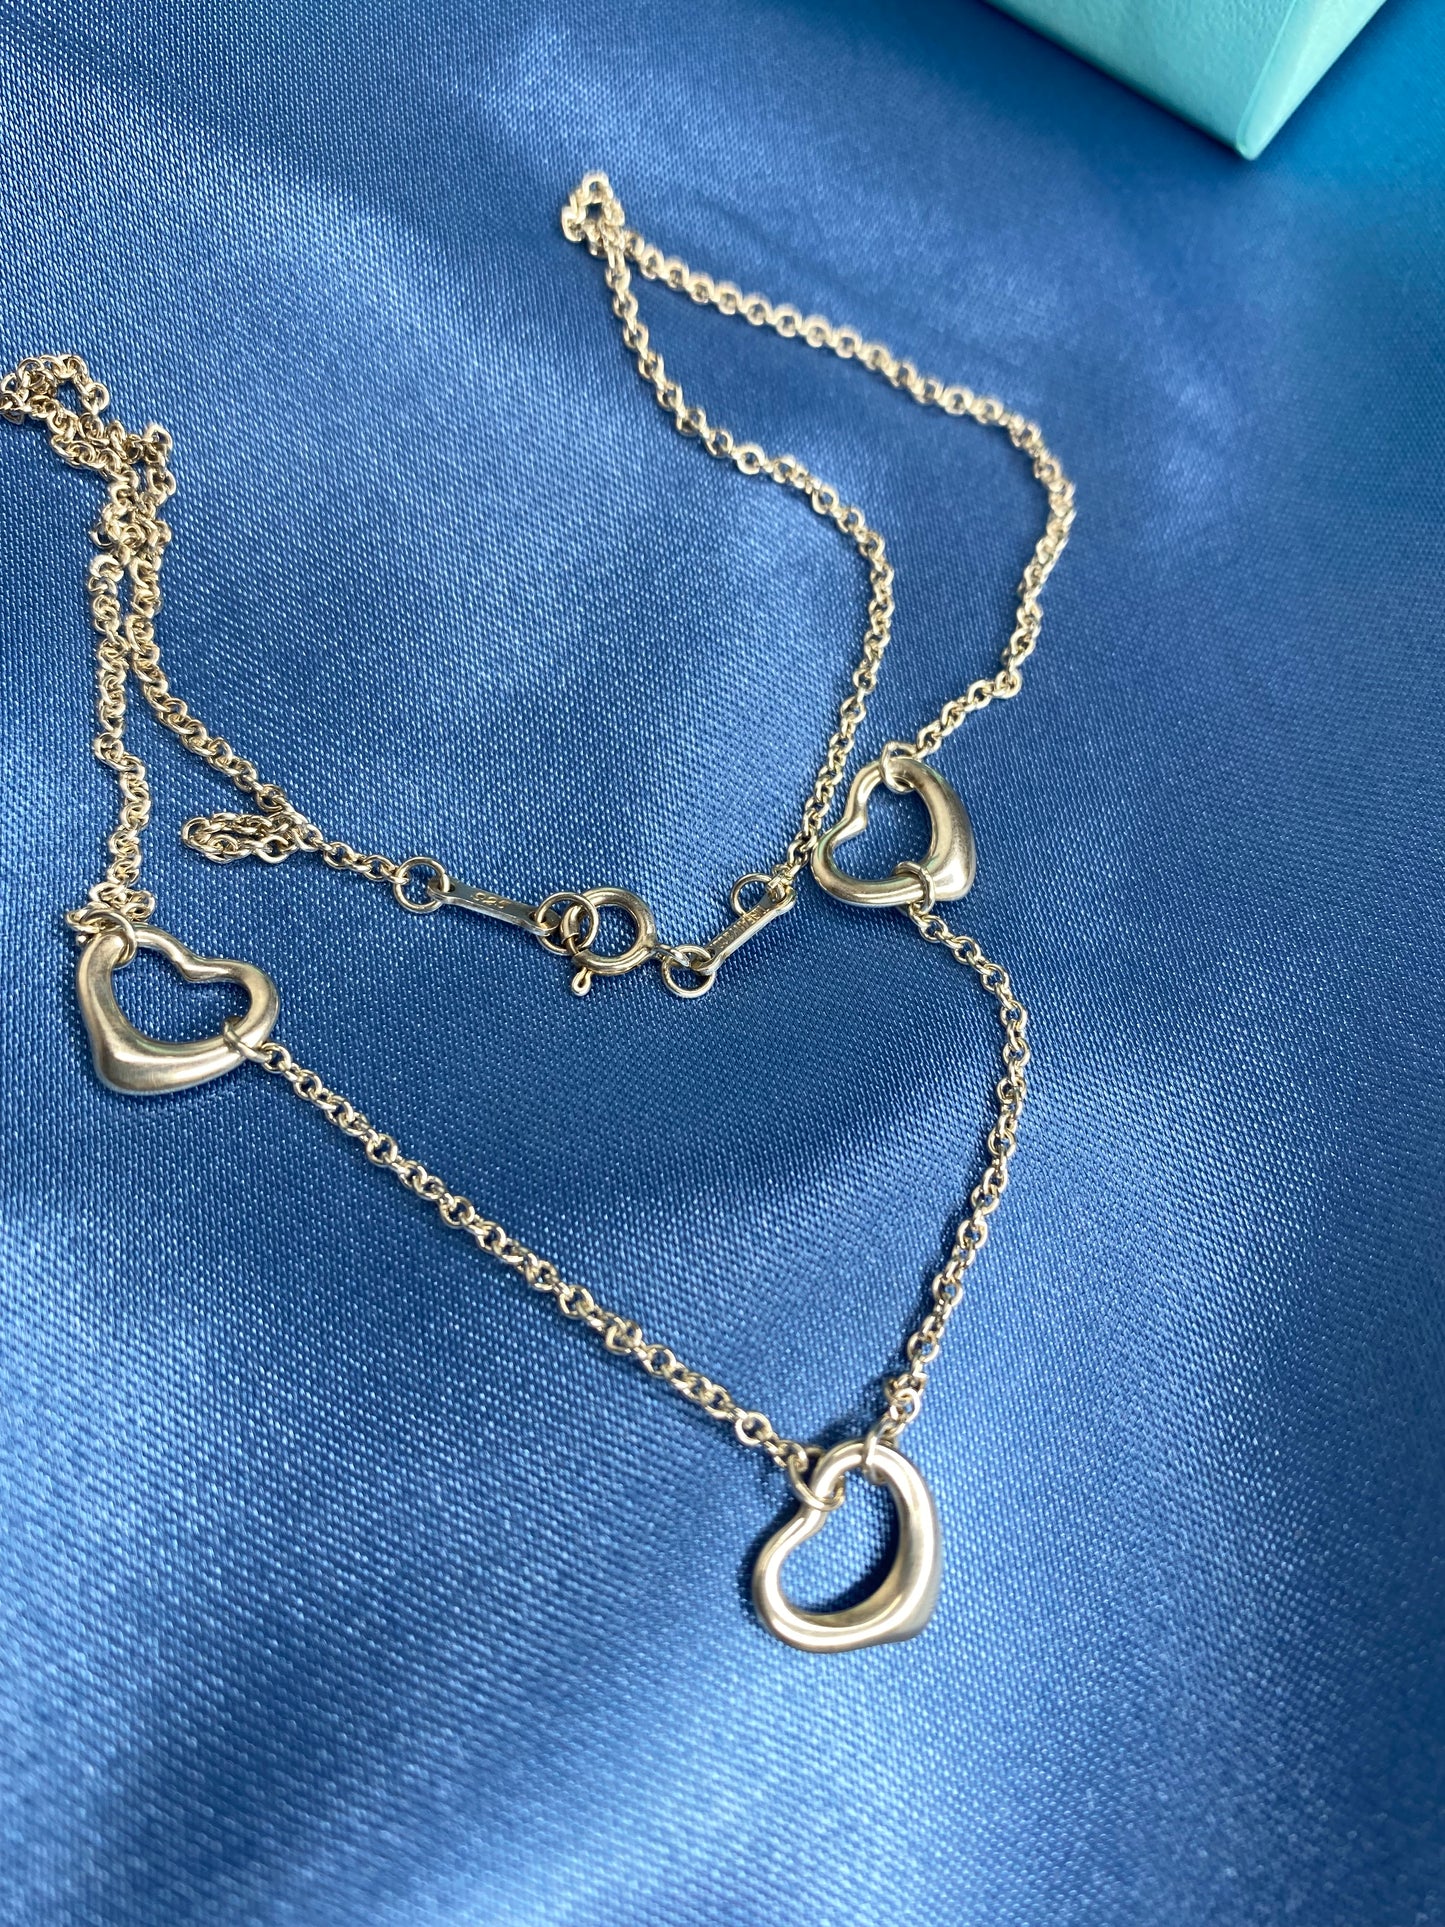 Tiffany Elsa Peretti Open Heart Sets Silver - Stud Earrings, Necklace and Bracelet